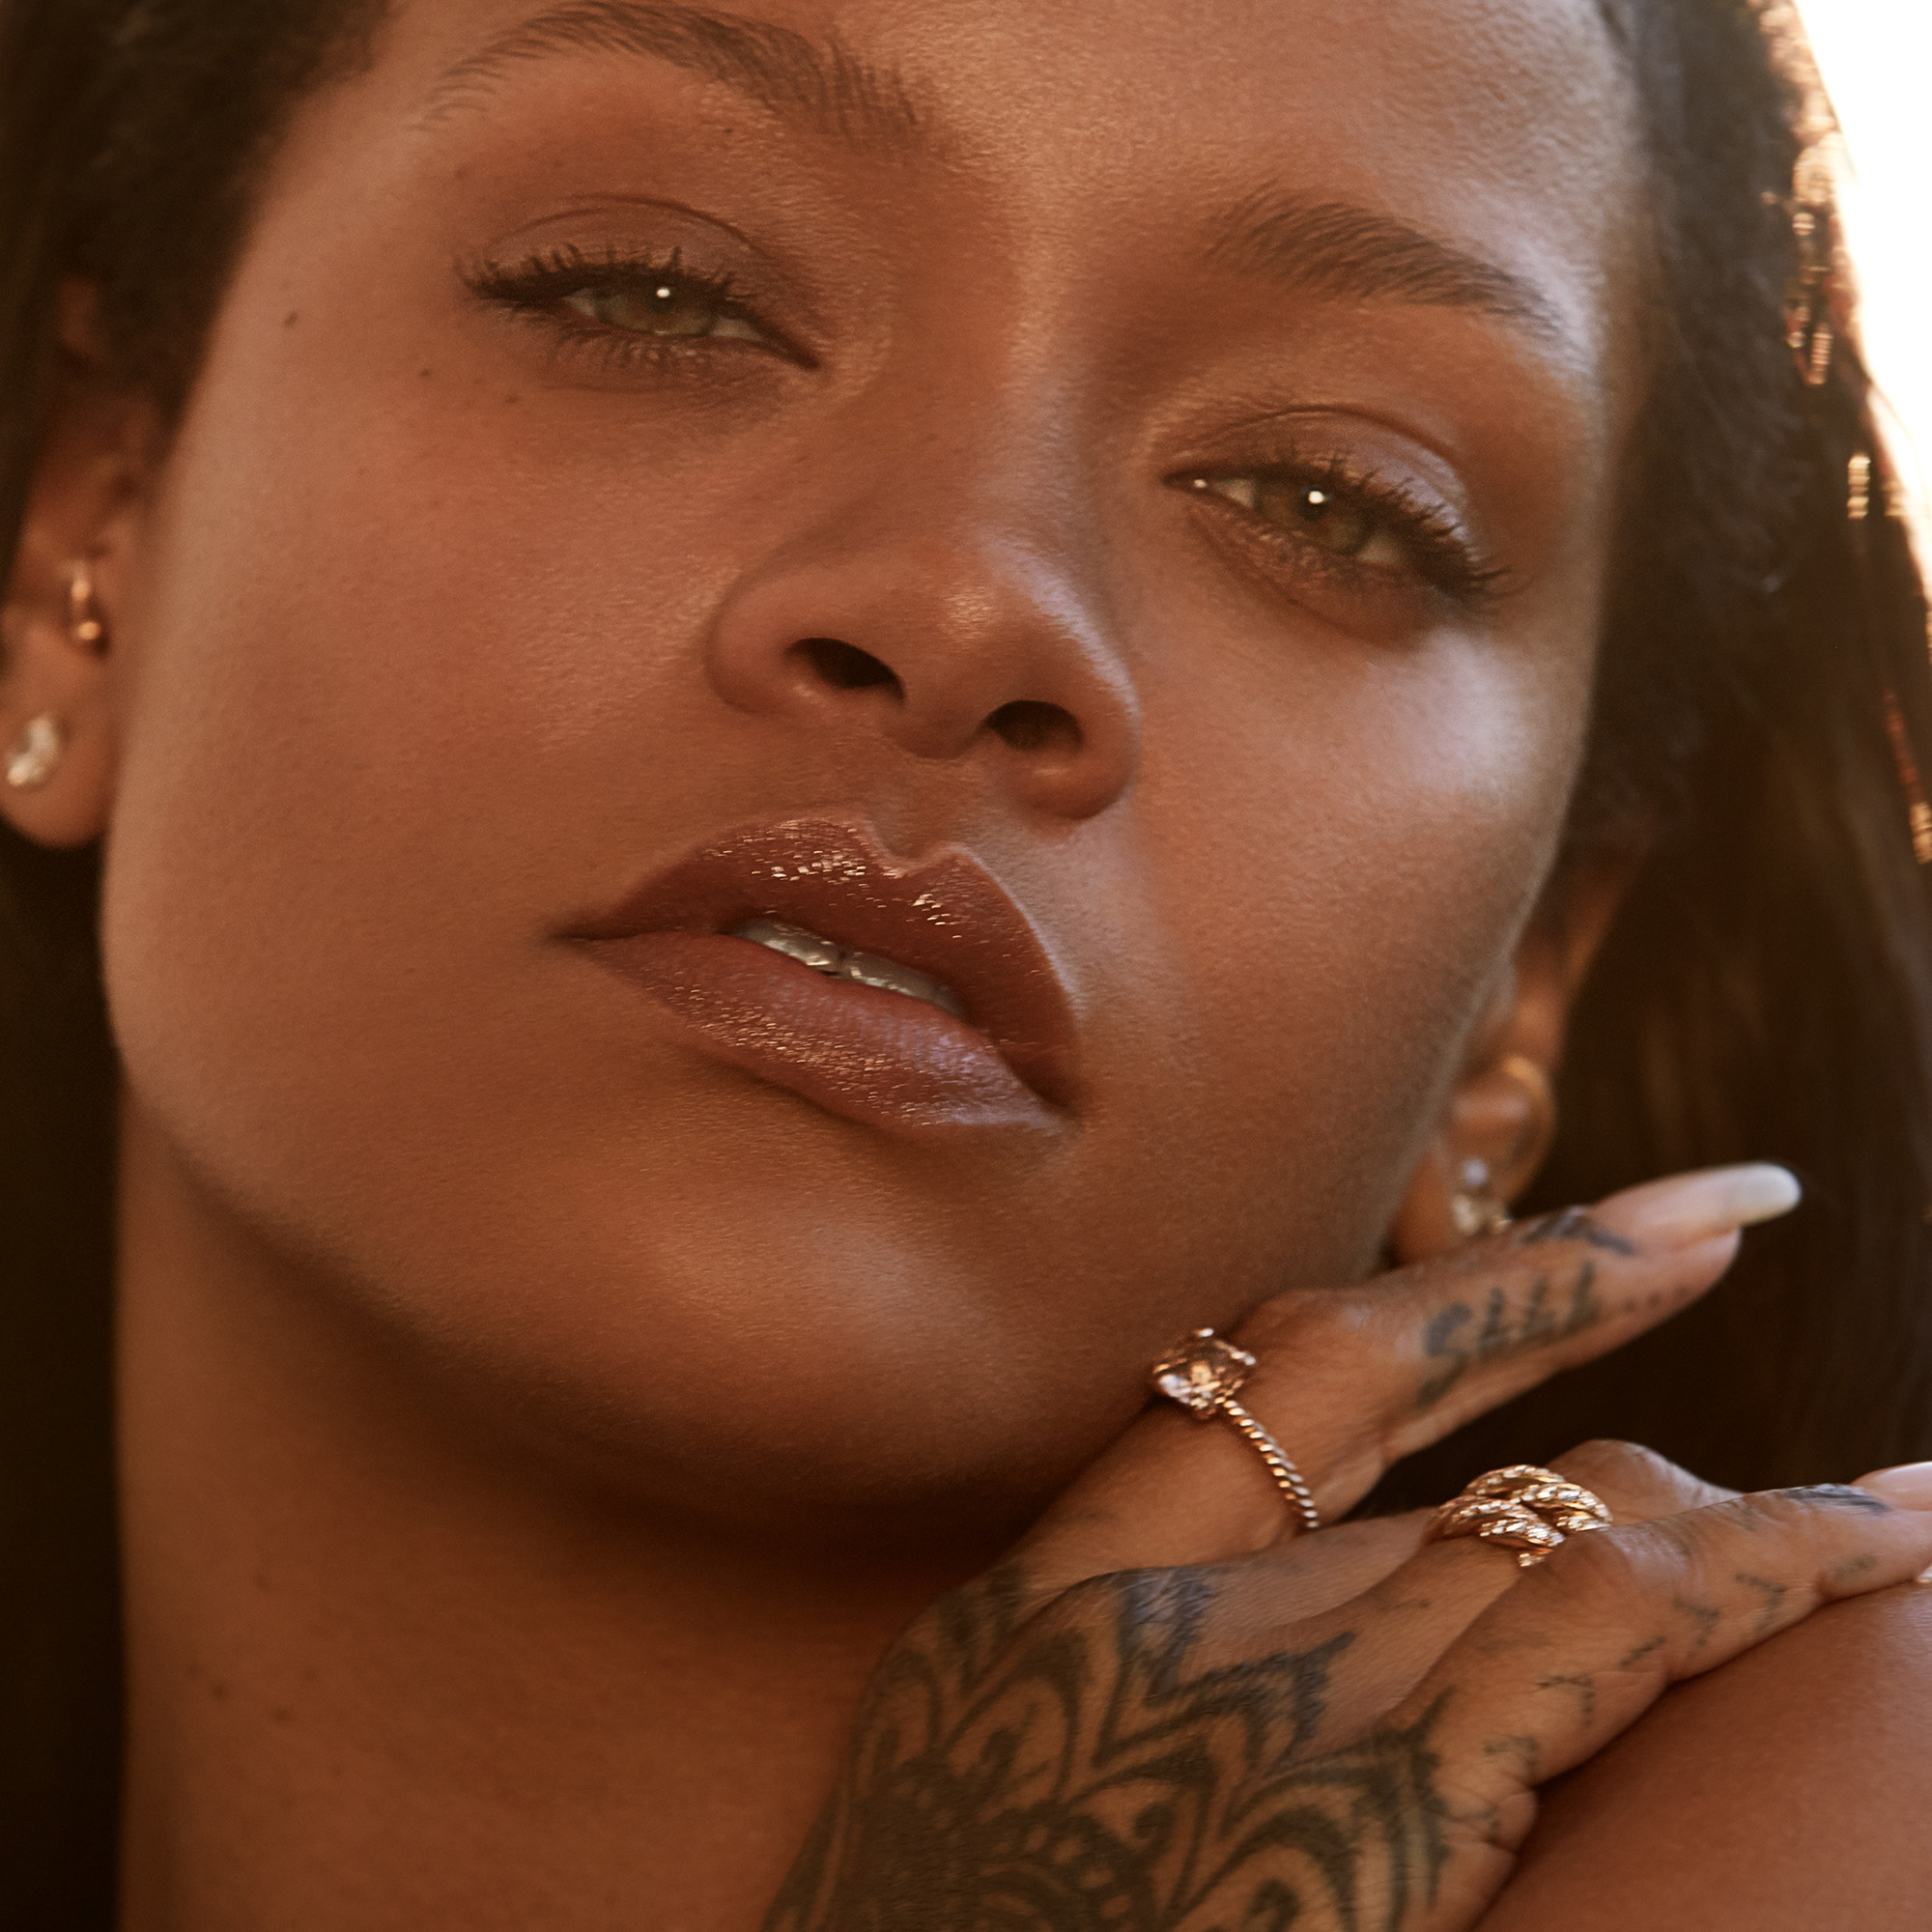 Rihanna Fenty Skin Campaign Image